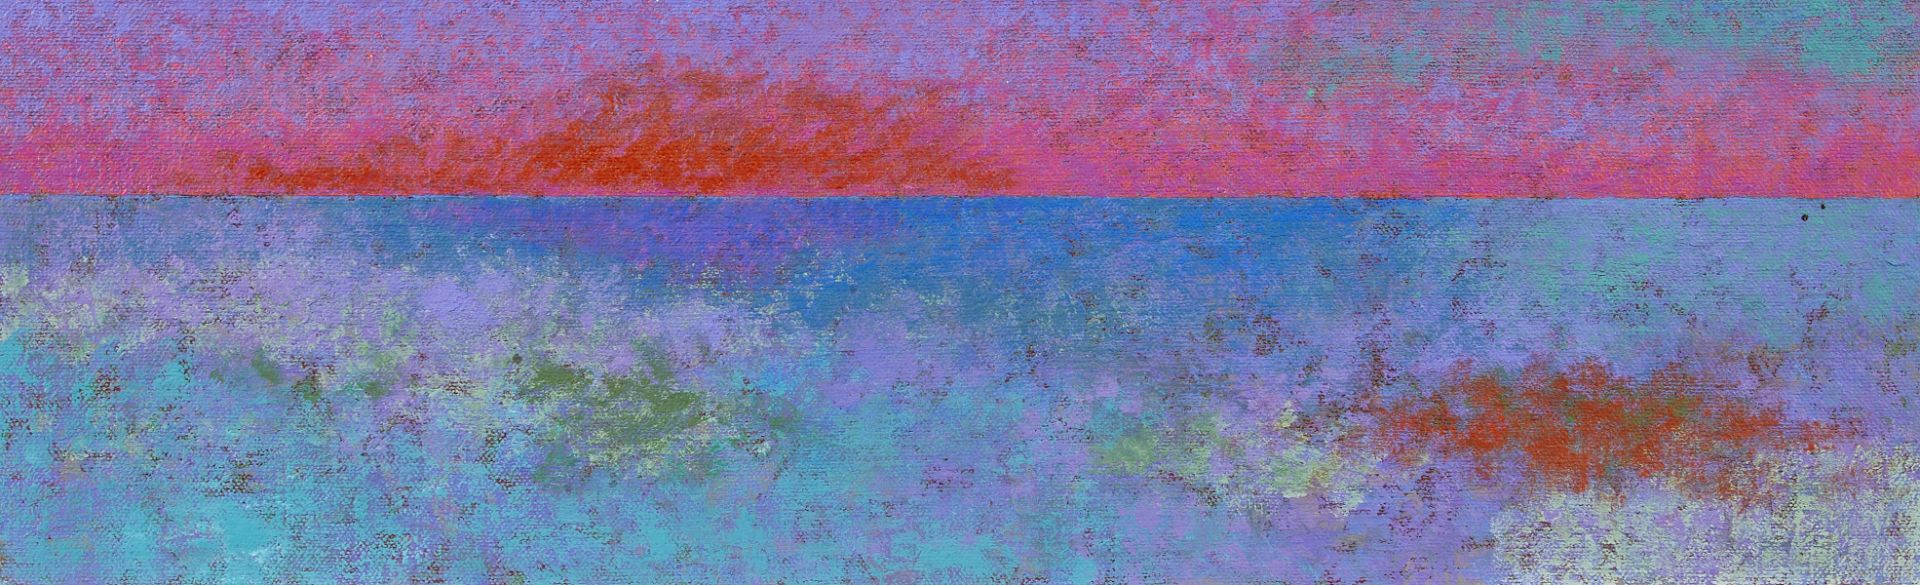 George Morrison "Red Rock Variation" Painting 1993 - Bild 3 aus 7